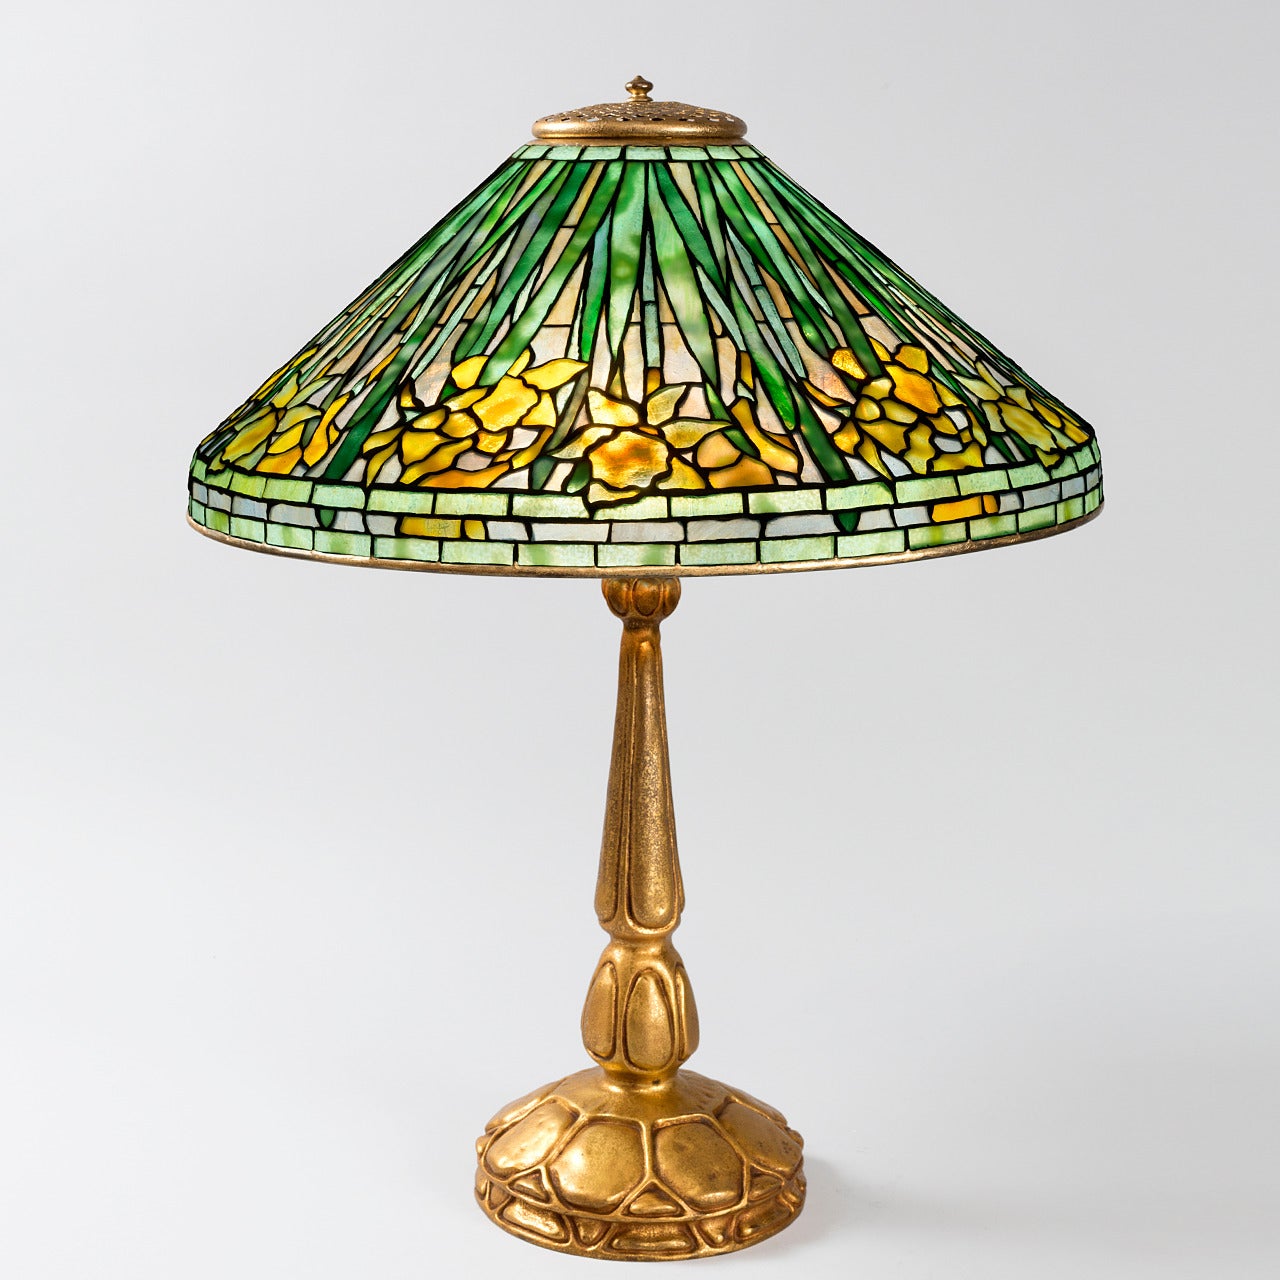 Tiffany Studios "Daffodil" Leaded Glass Table Lamp